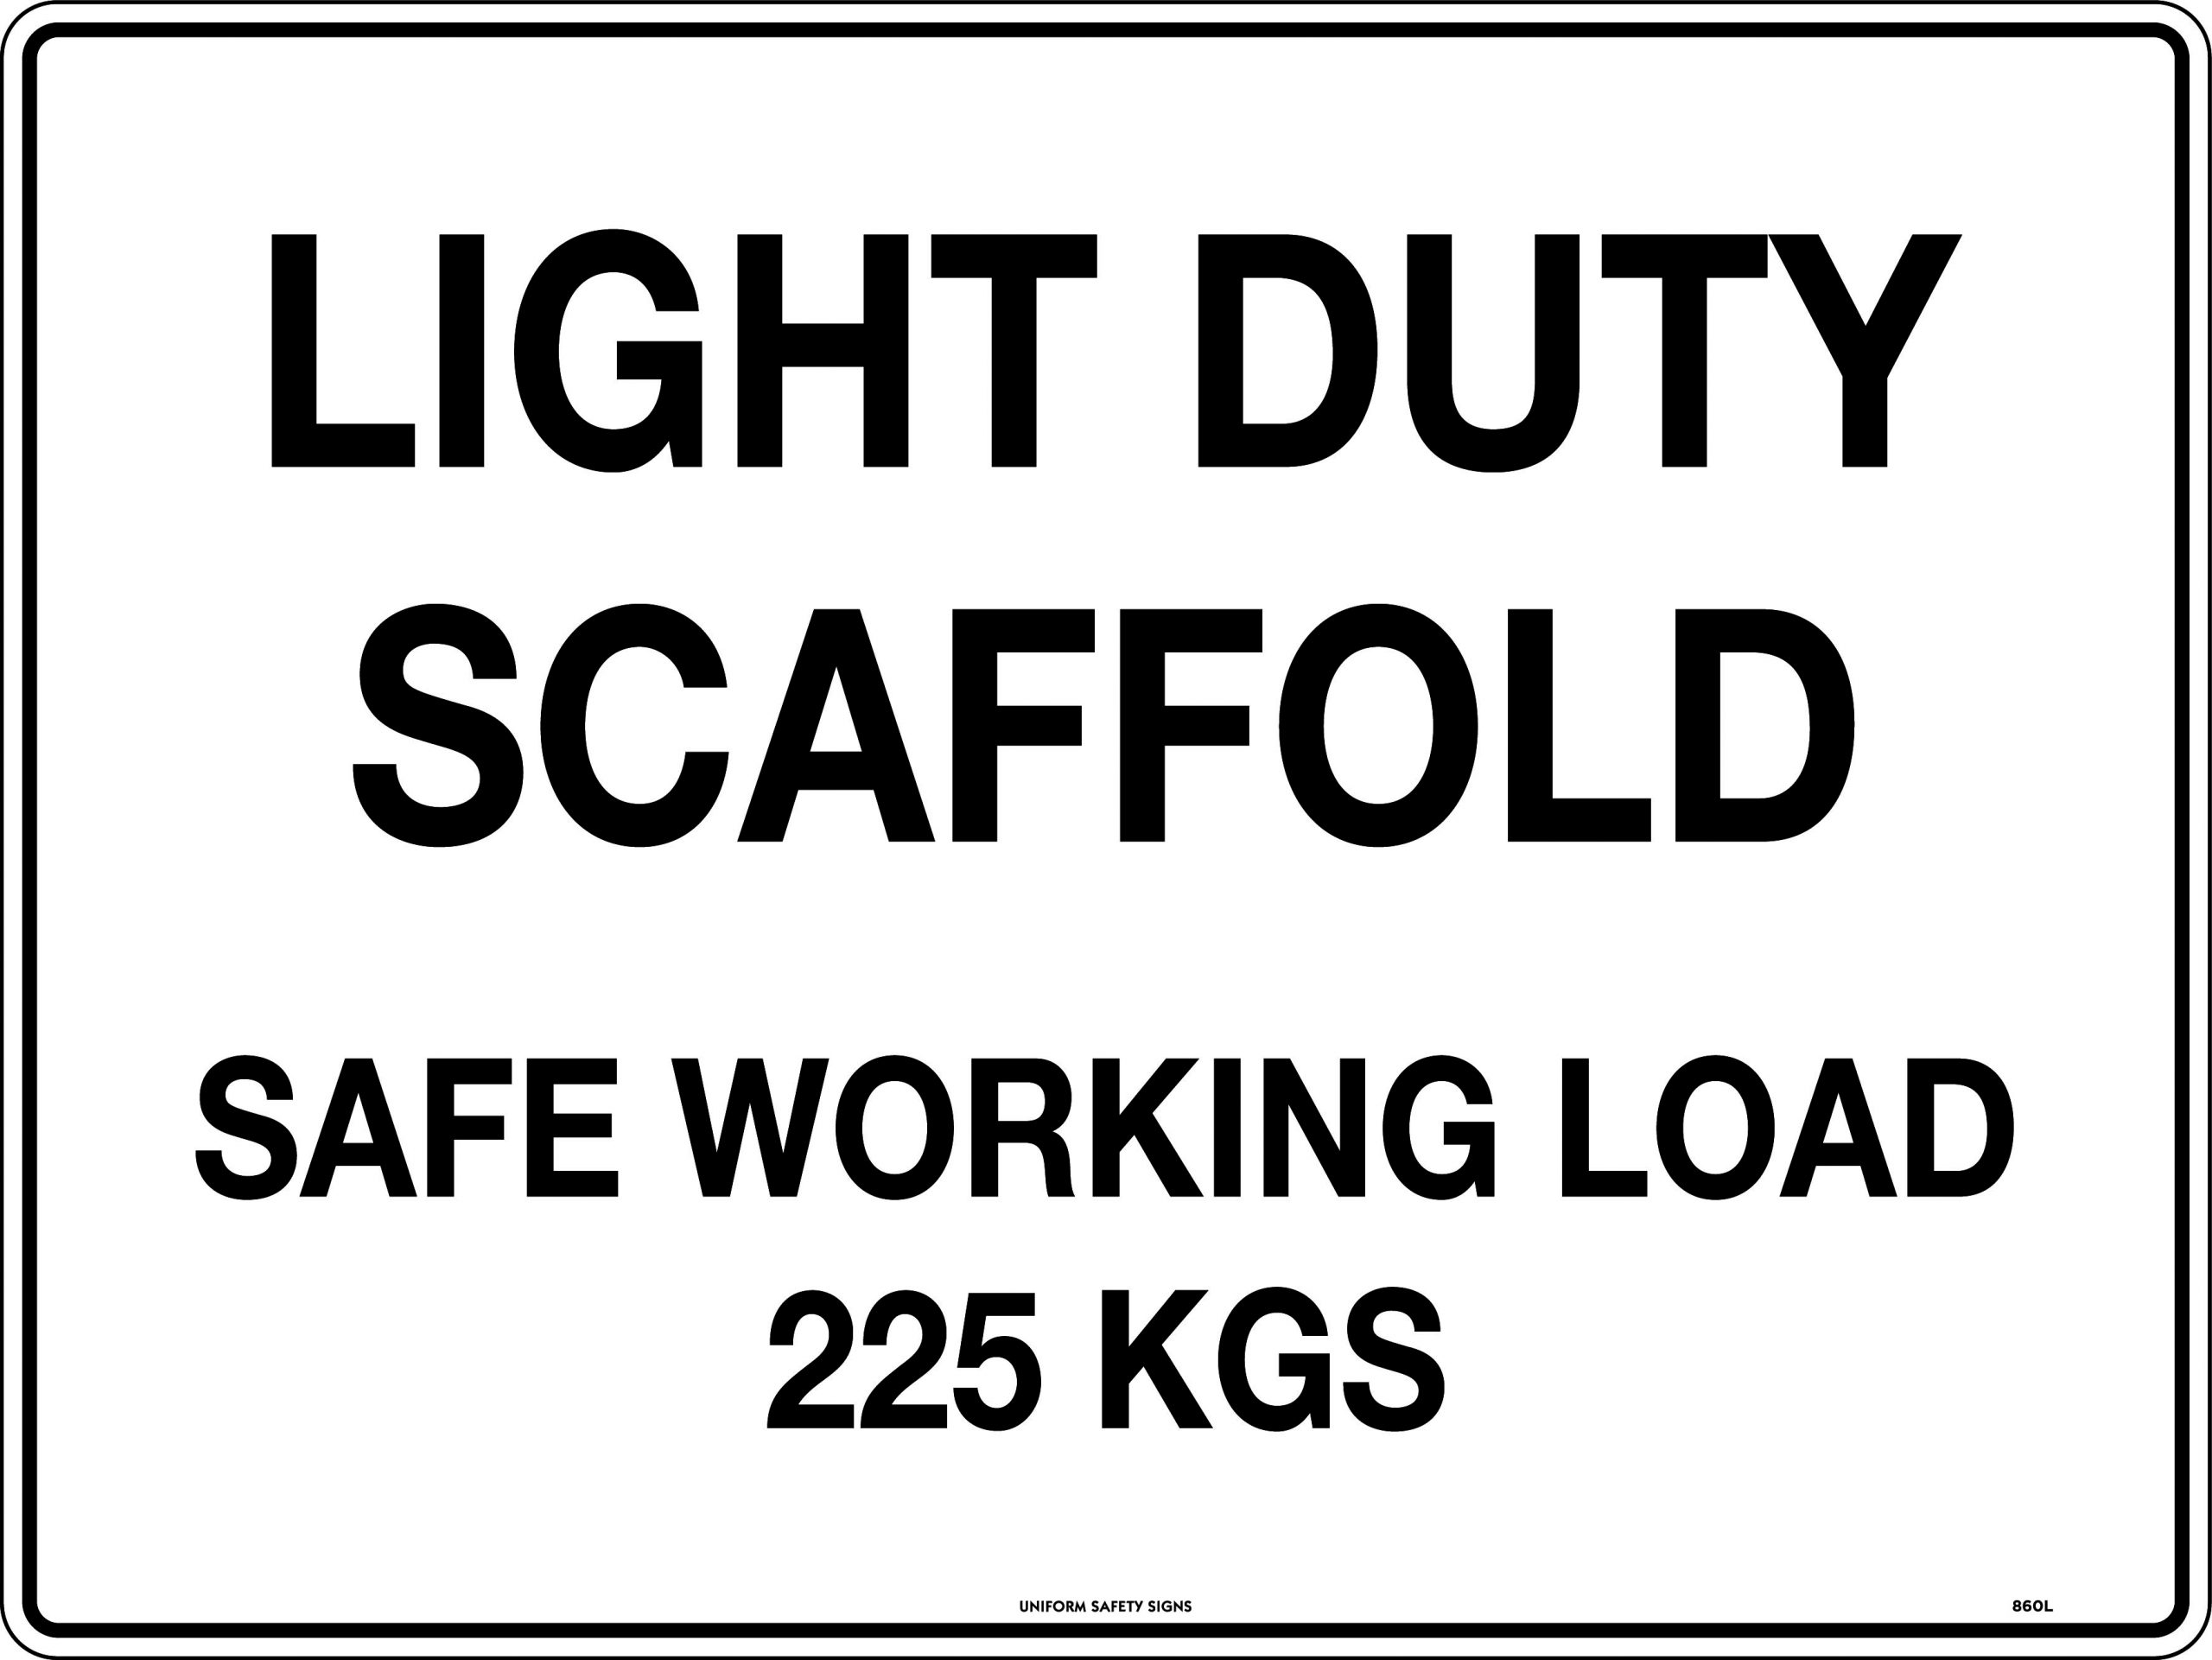 UNIFORM SAFETY 600X450MM POLY LIGHT DUTY SCAFFOLD SAFE WORKING LOAD 22